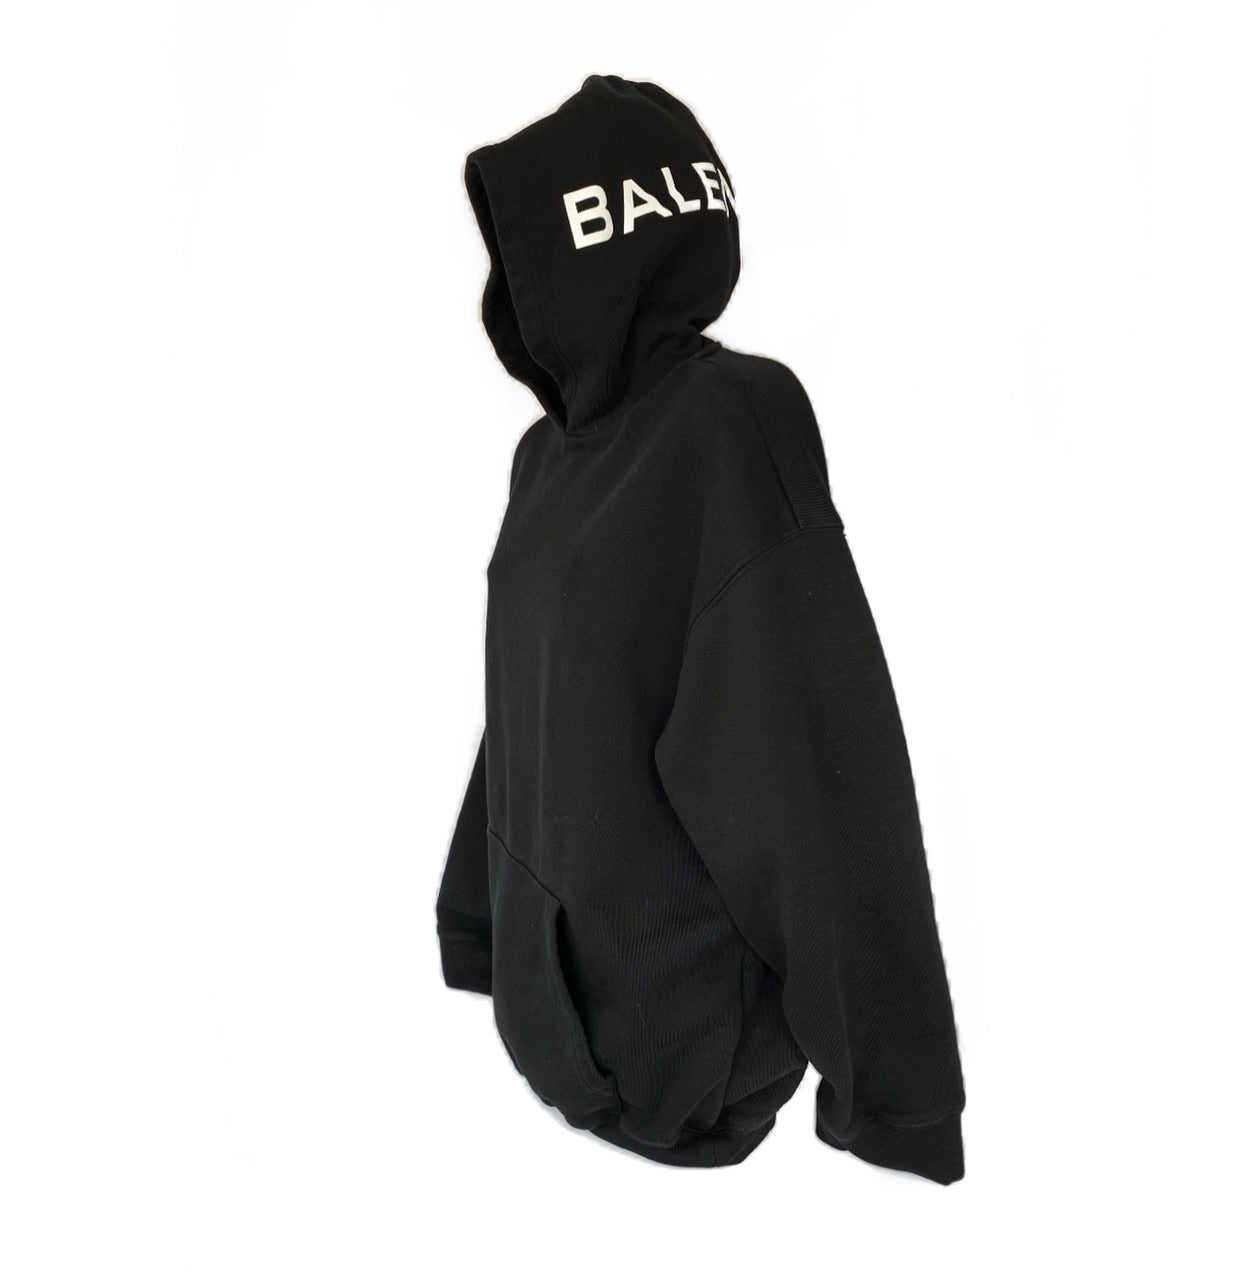 balenciaga hoodie with logo on hood